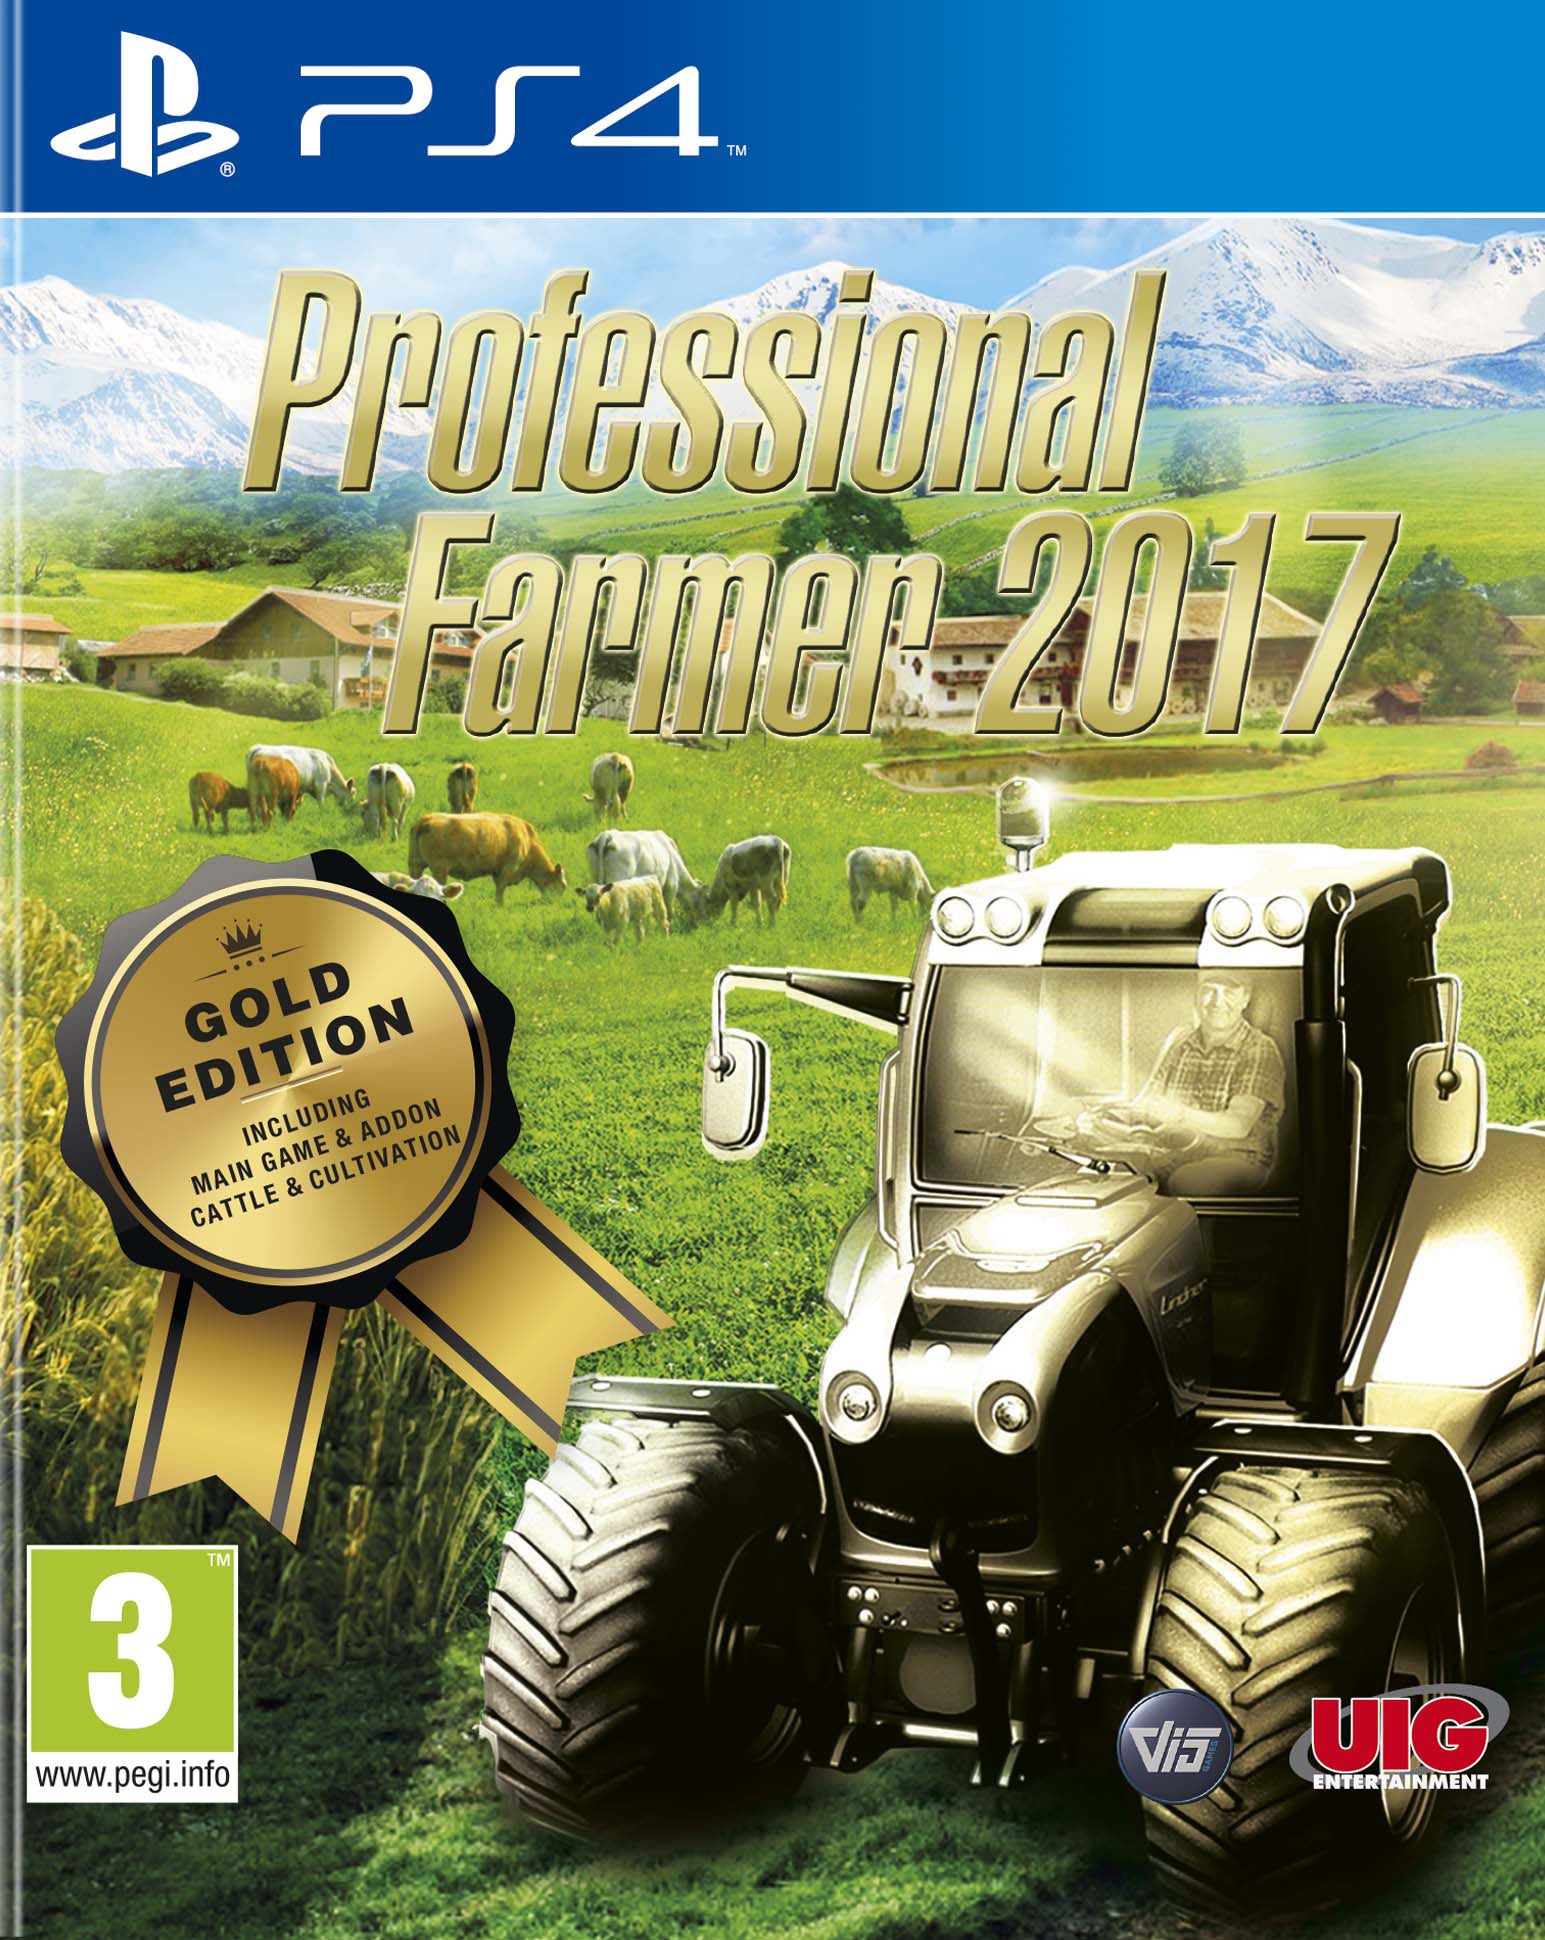 Professional Farmer 2017 - Gold Edition (PS4)